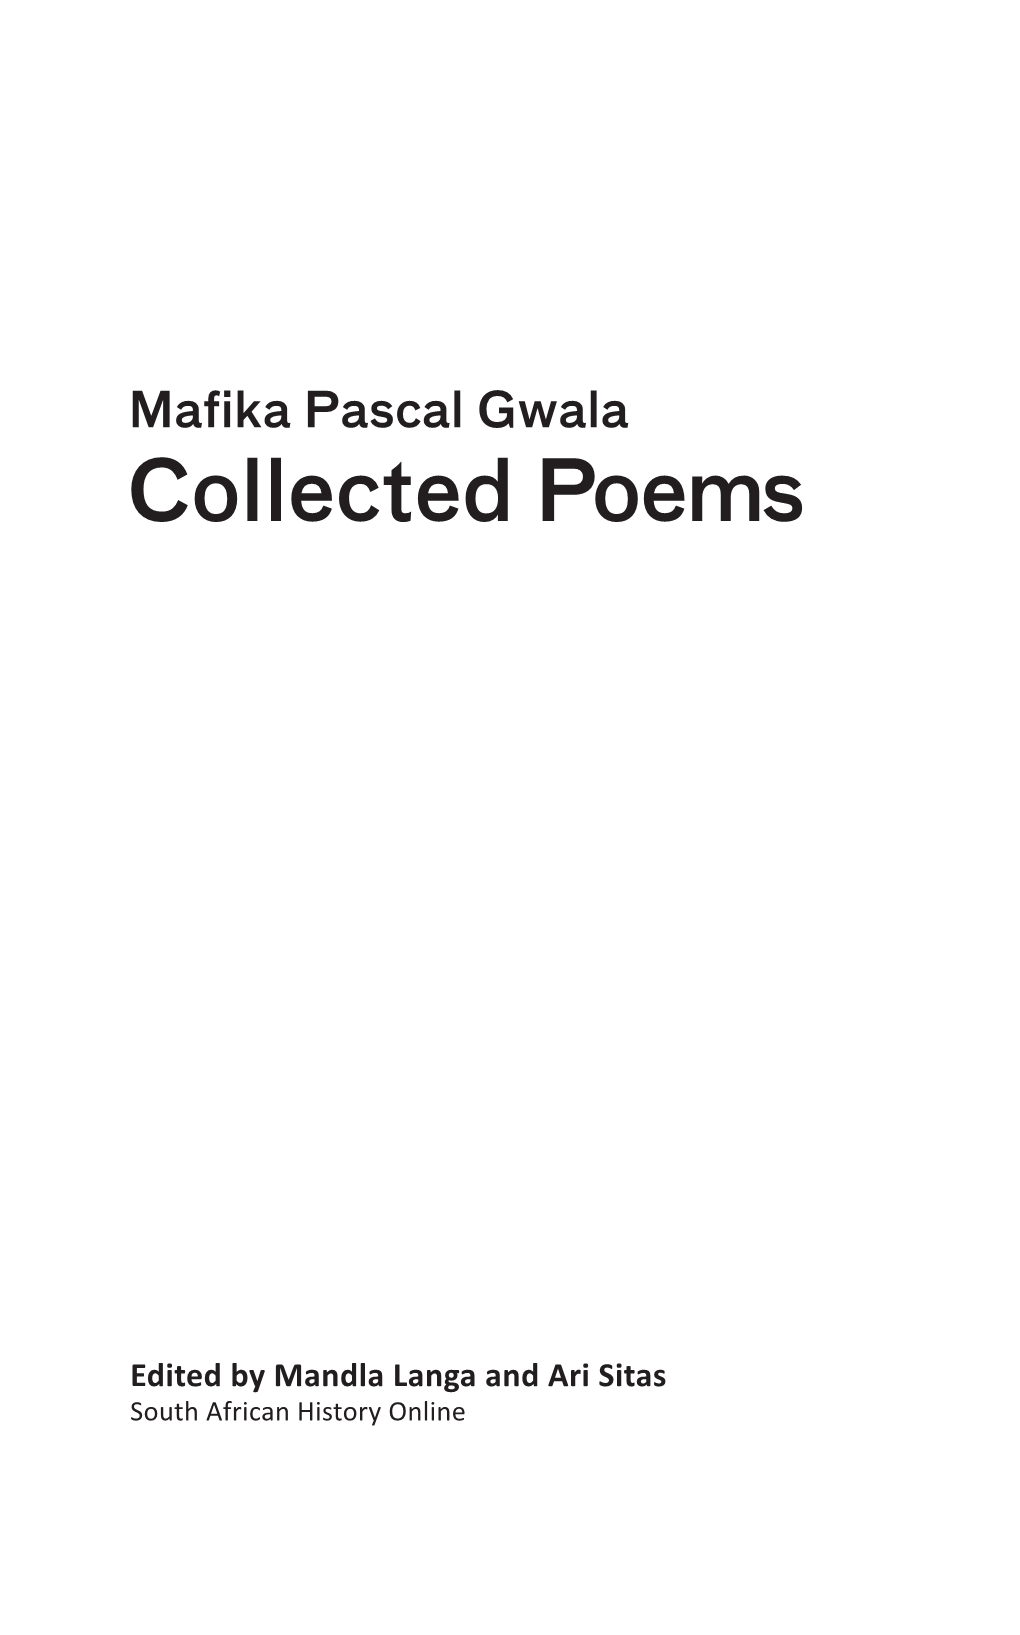 Mafika Pascal Gwala Collected Poems